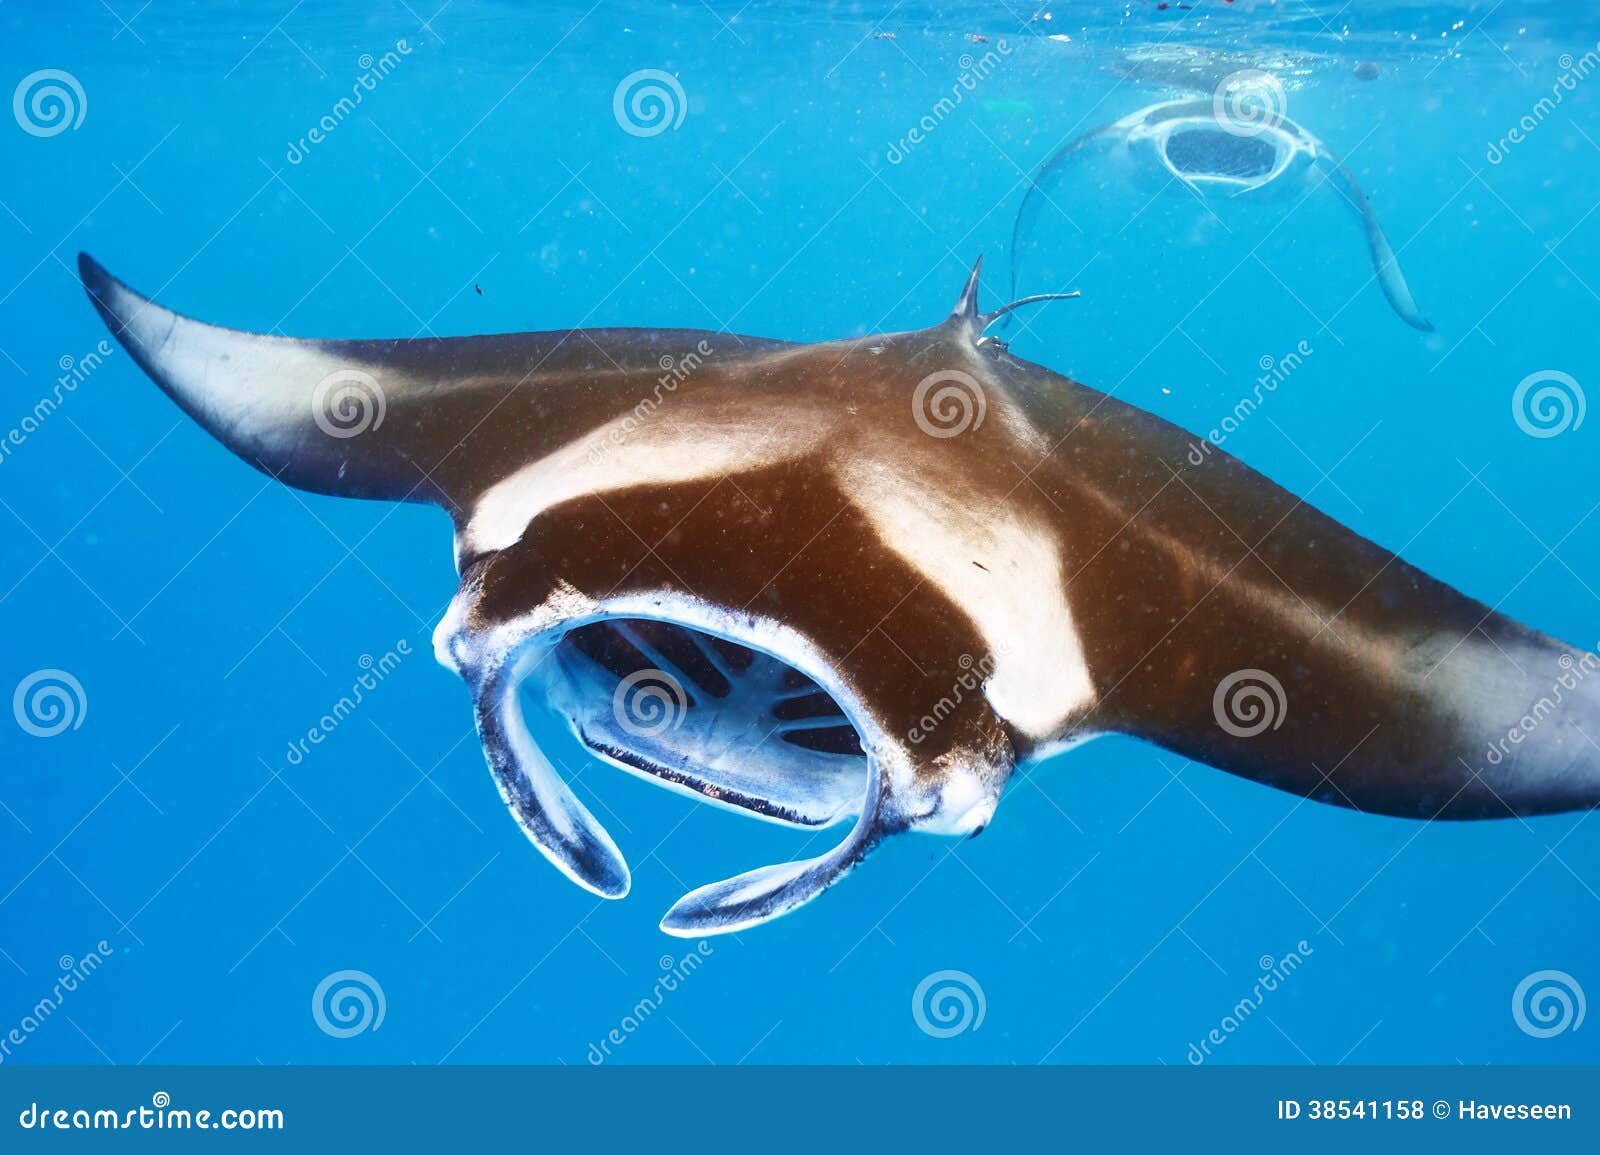 manta ray floating underwater